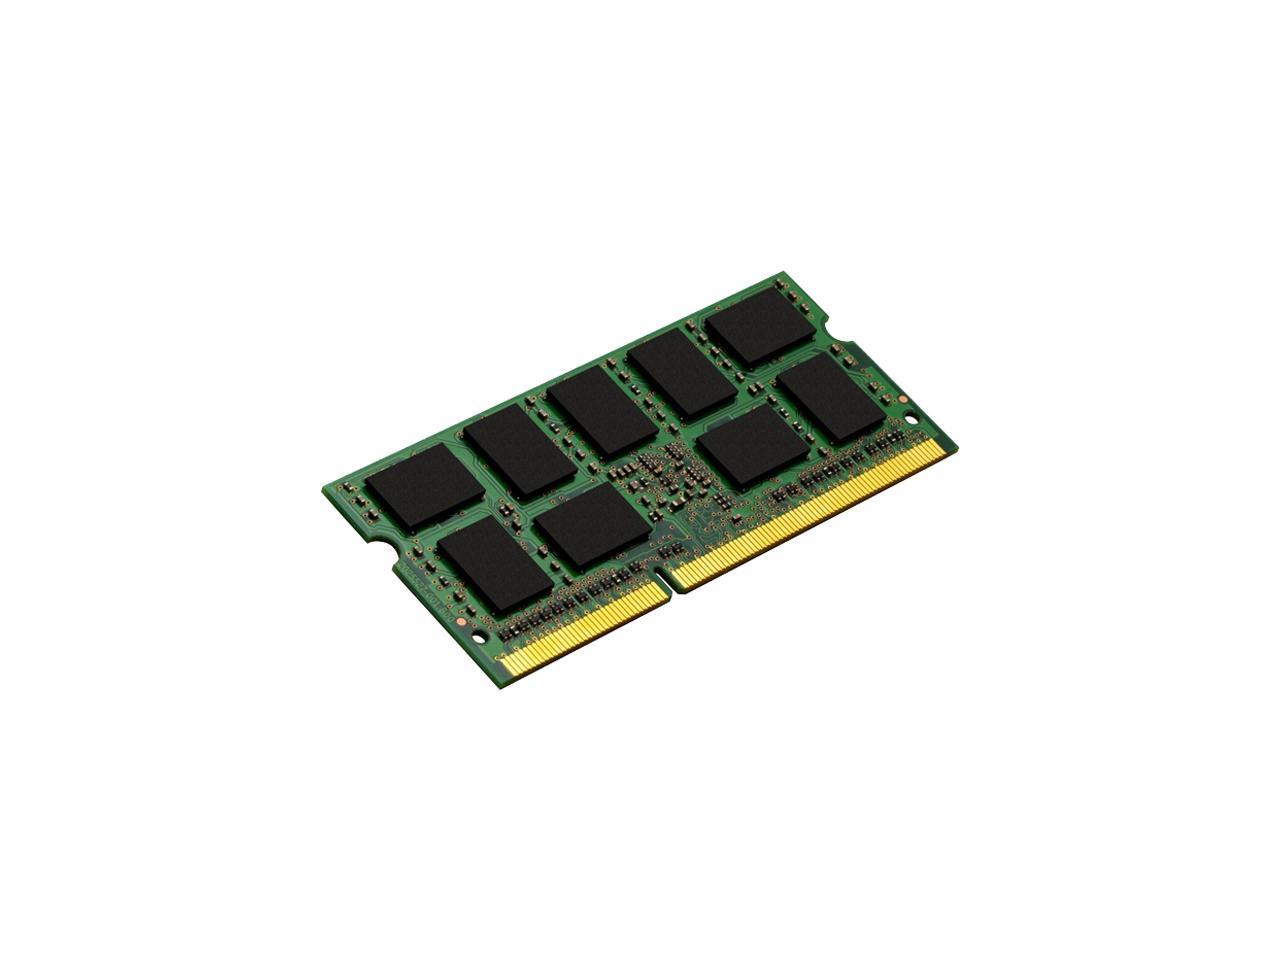 Netpatibles 8Gb Ddr3 Sdram Memory Module A5185900-Npm